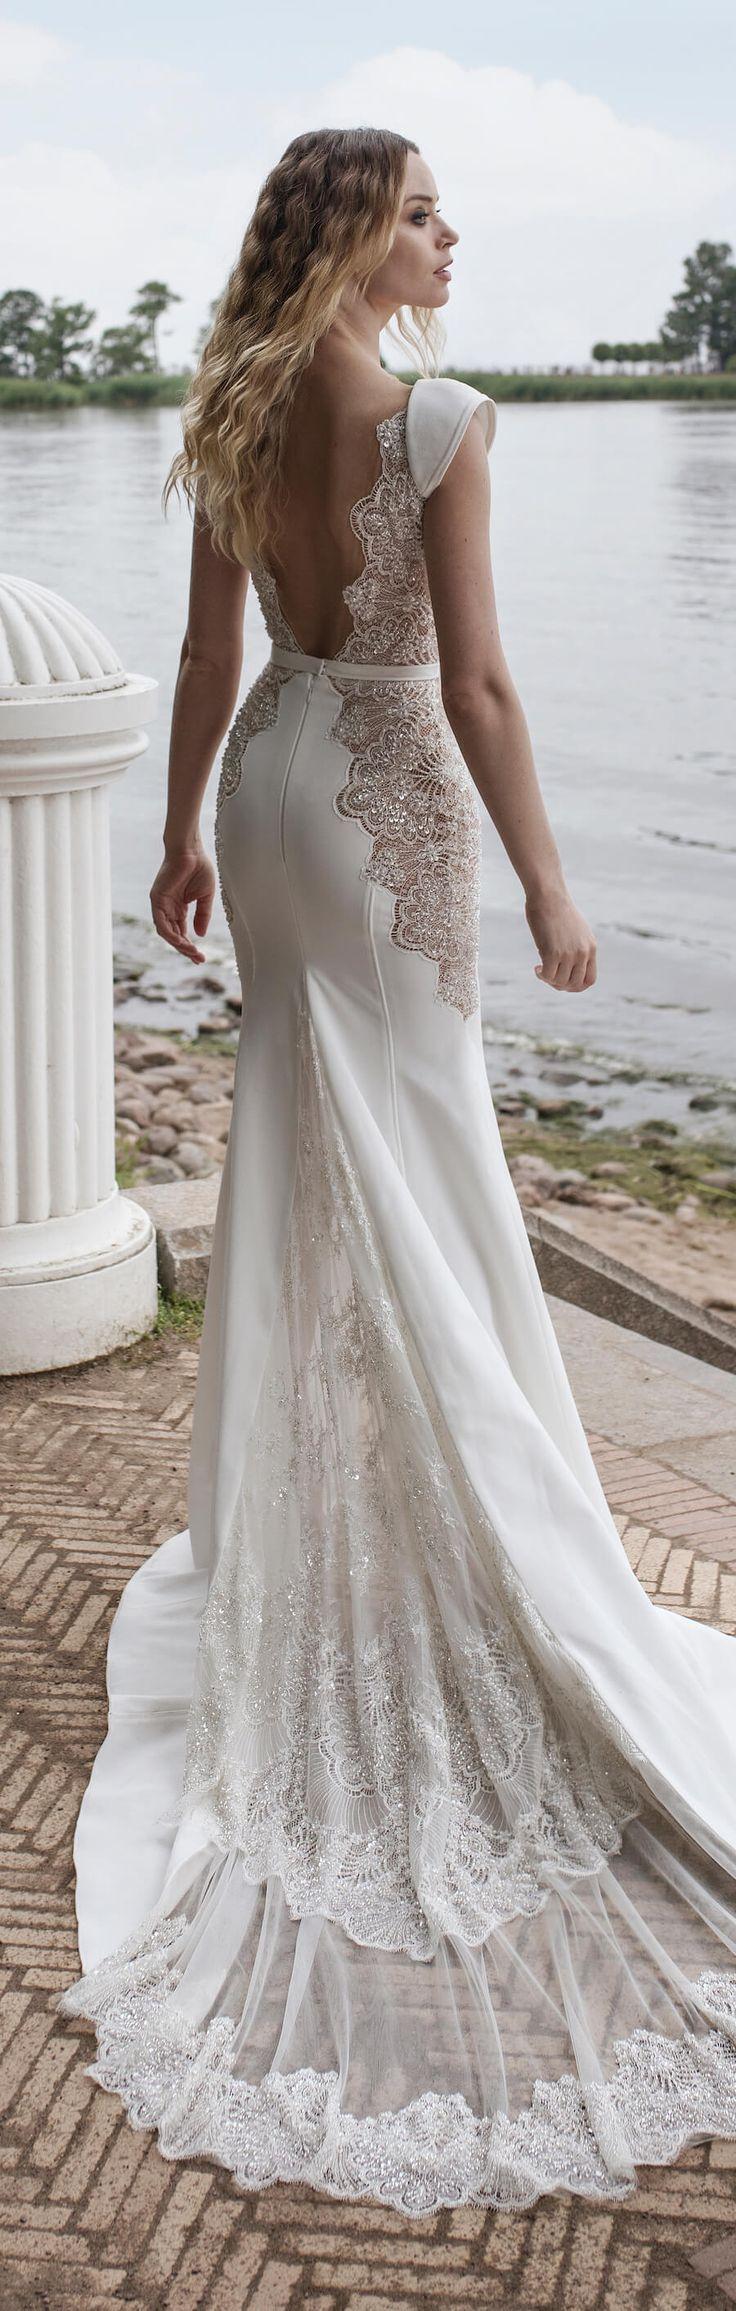 زفاف - Lian Rokman Wedding Dresses 2018: Stardust Bridal Collection